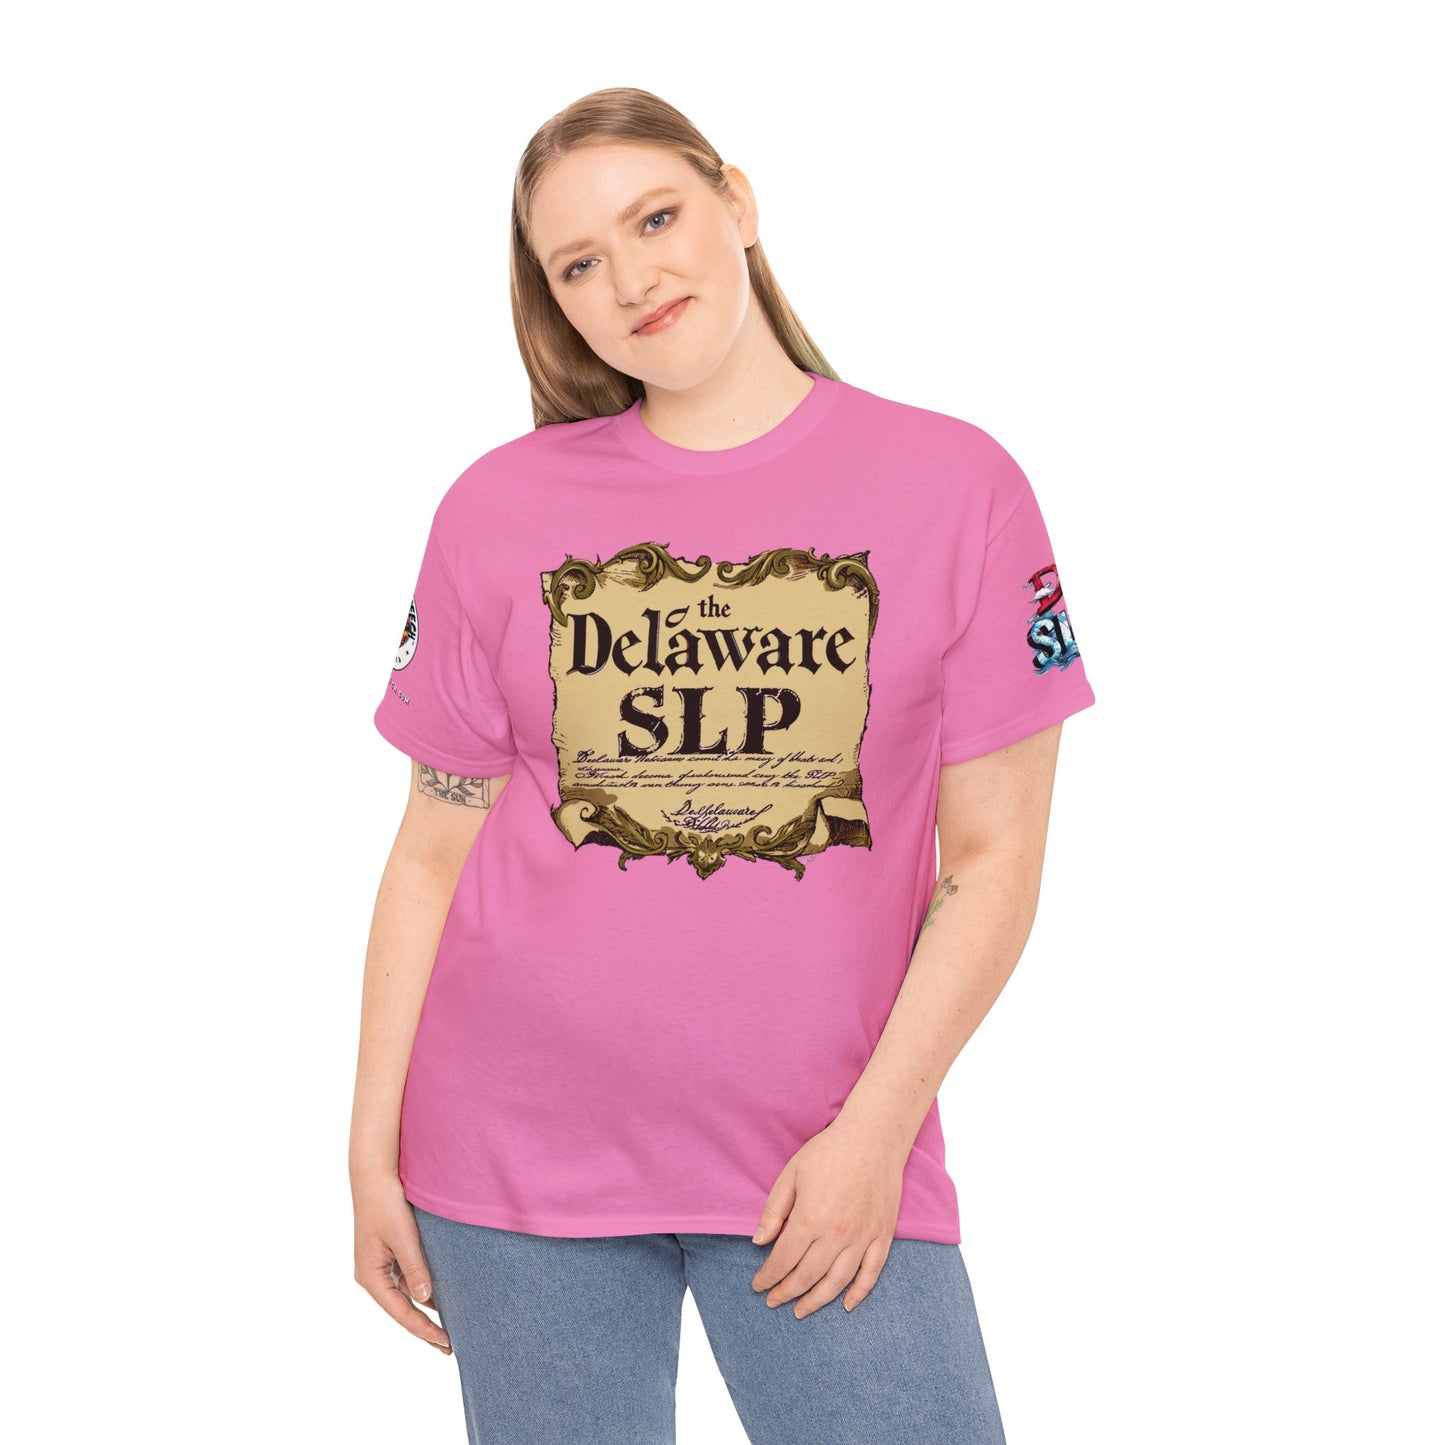 Delaware SLP #1 Speech Therapy Shirt